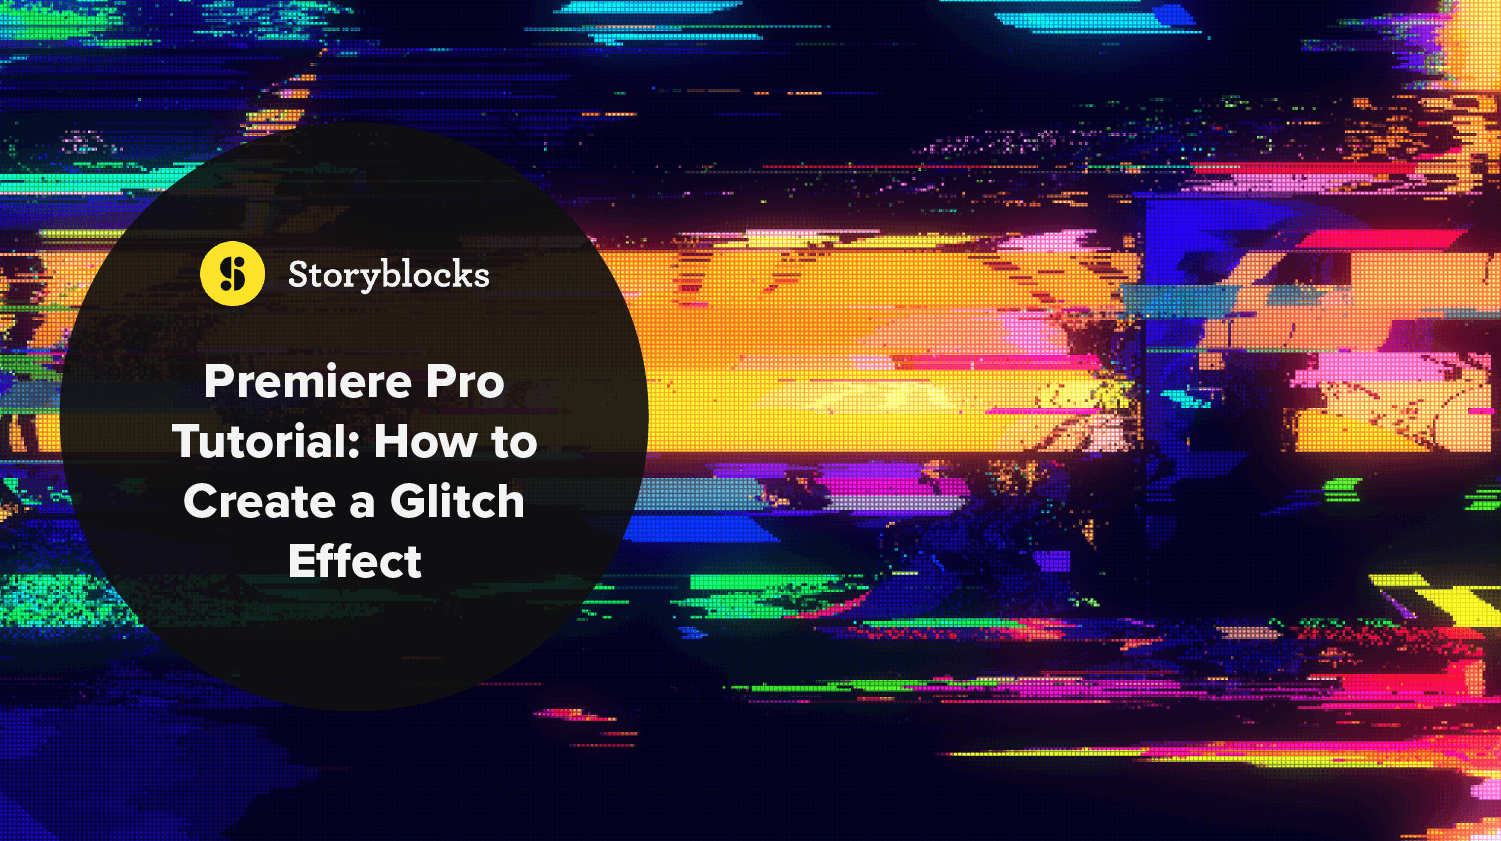 Premiere Pro Tutorial: How to Create a Glitch Effect